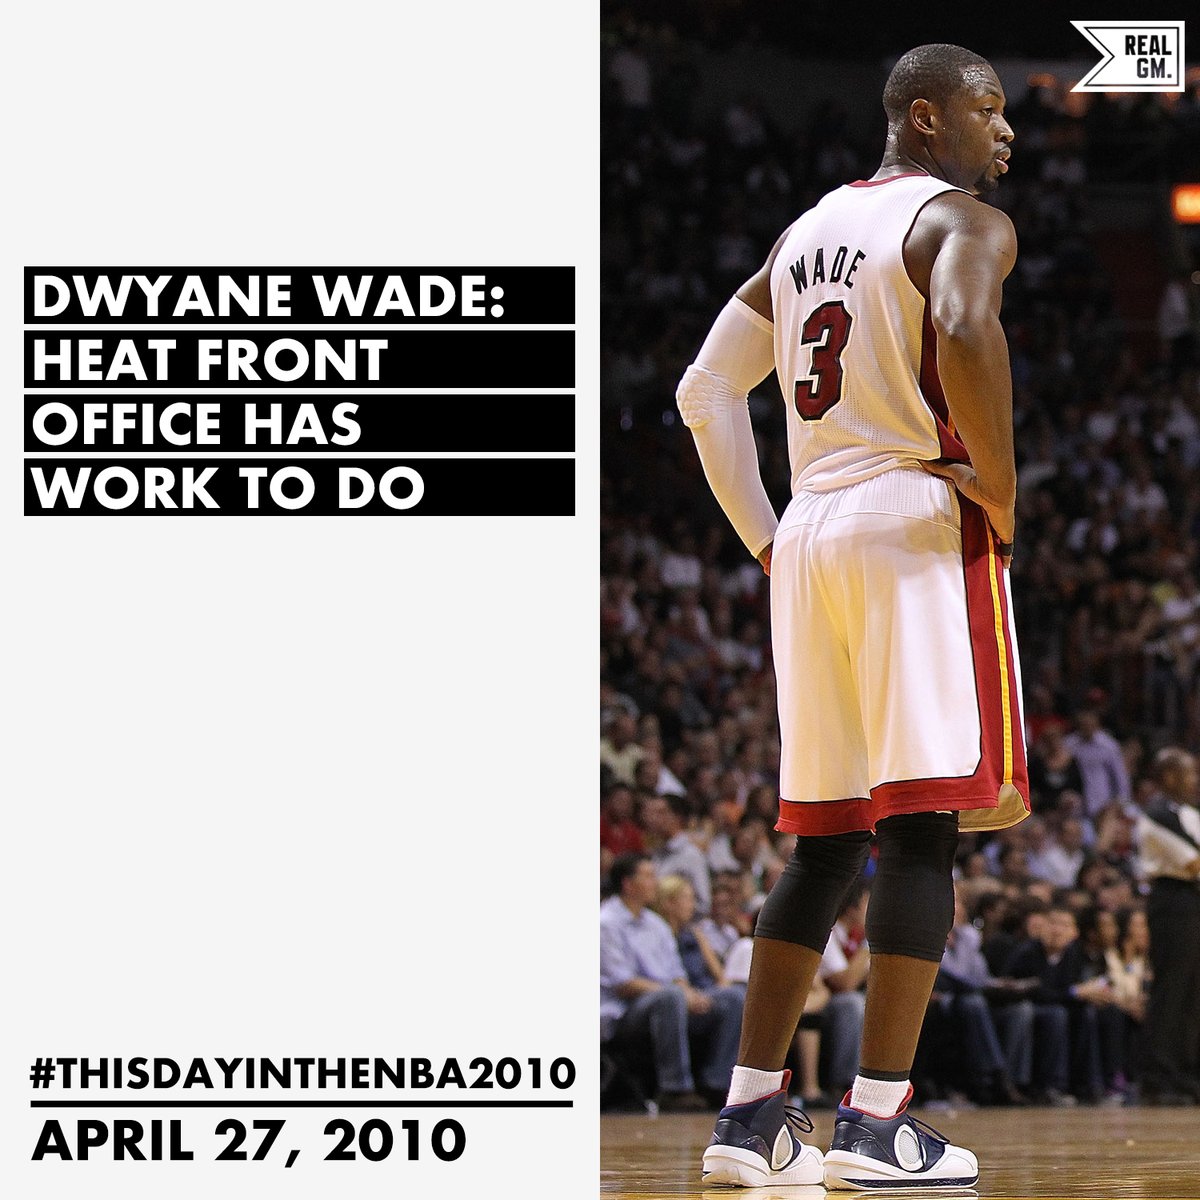  #ThisDayInTheNBA2010April 27, 2010Dwyane Wade: Heat Front Office Has Work To Do https://basketball.realgm.com/wiretap/203554/Dwyane-Wade-Heat-Front-Office-Has-Work-To-Do